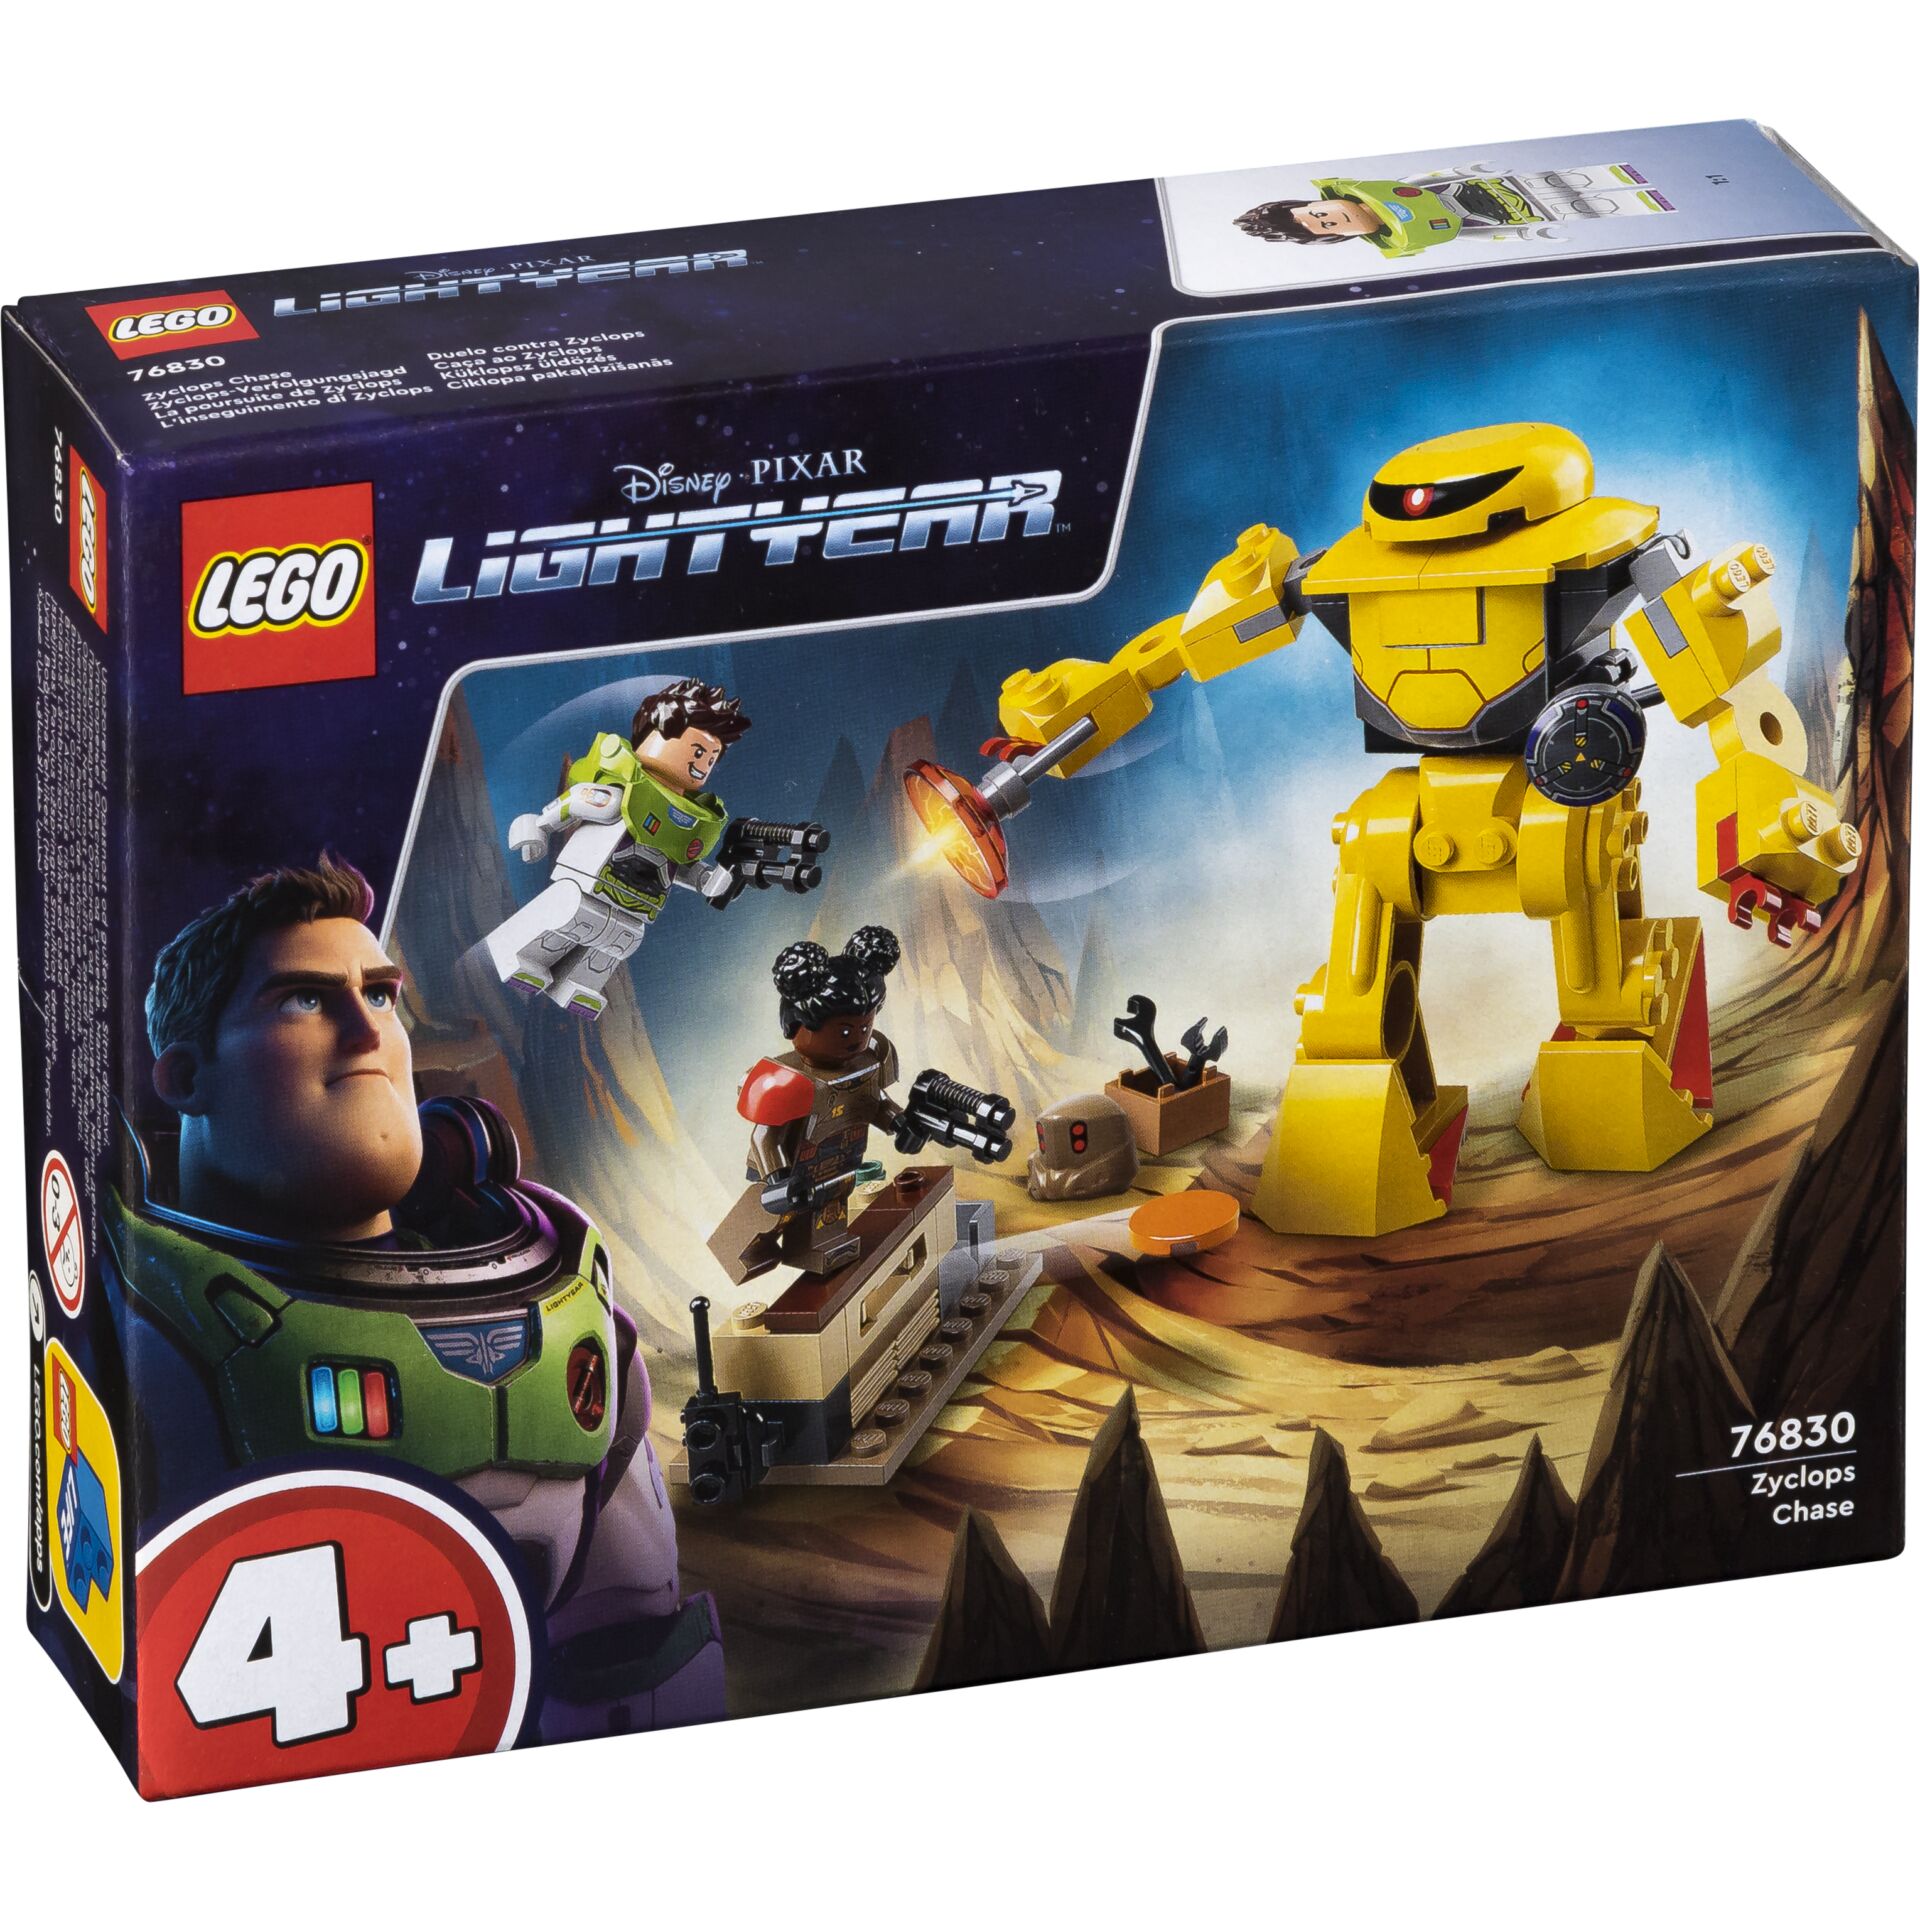 LEGO Disney Lightyear - Zyclops-Verfolgungsjagd